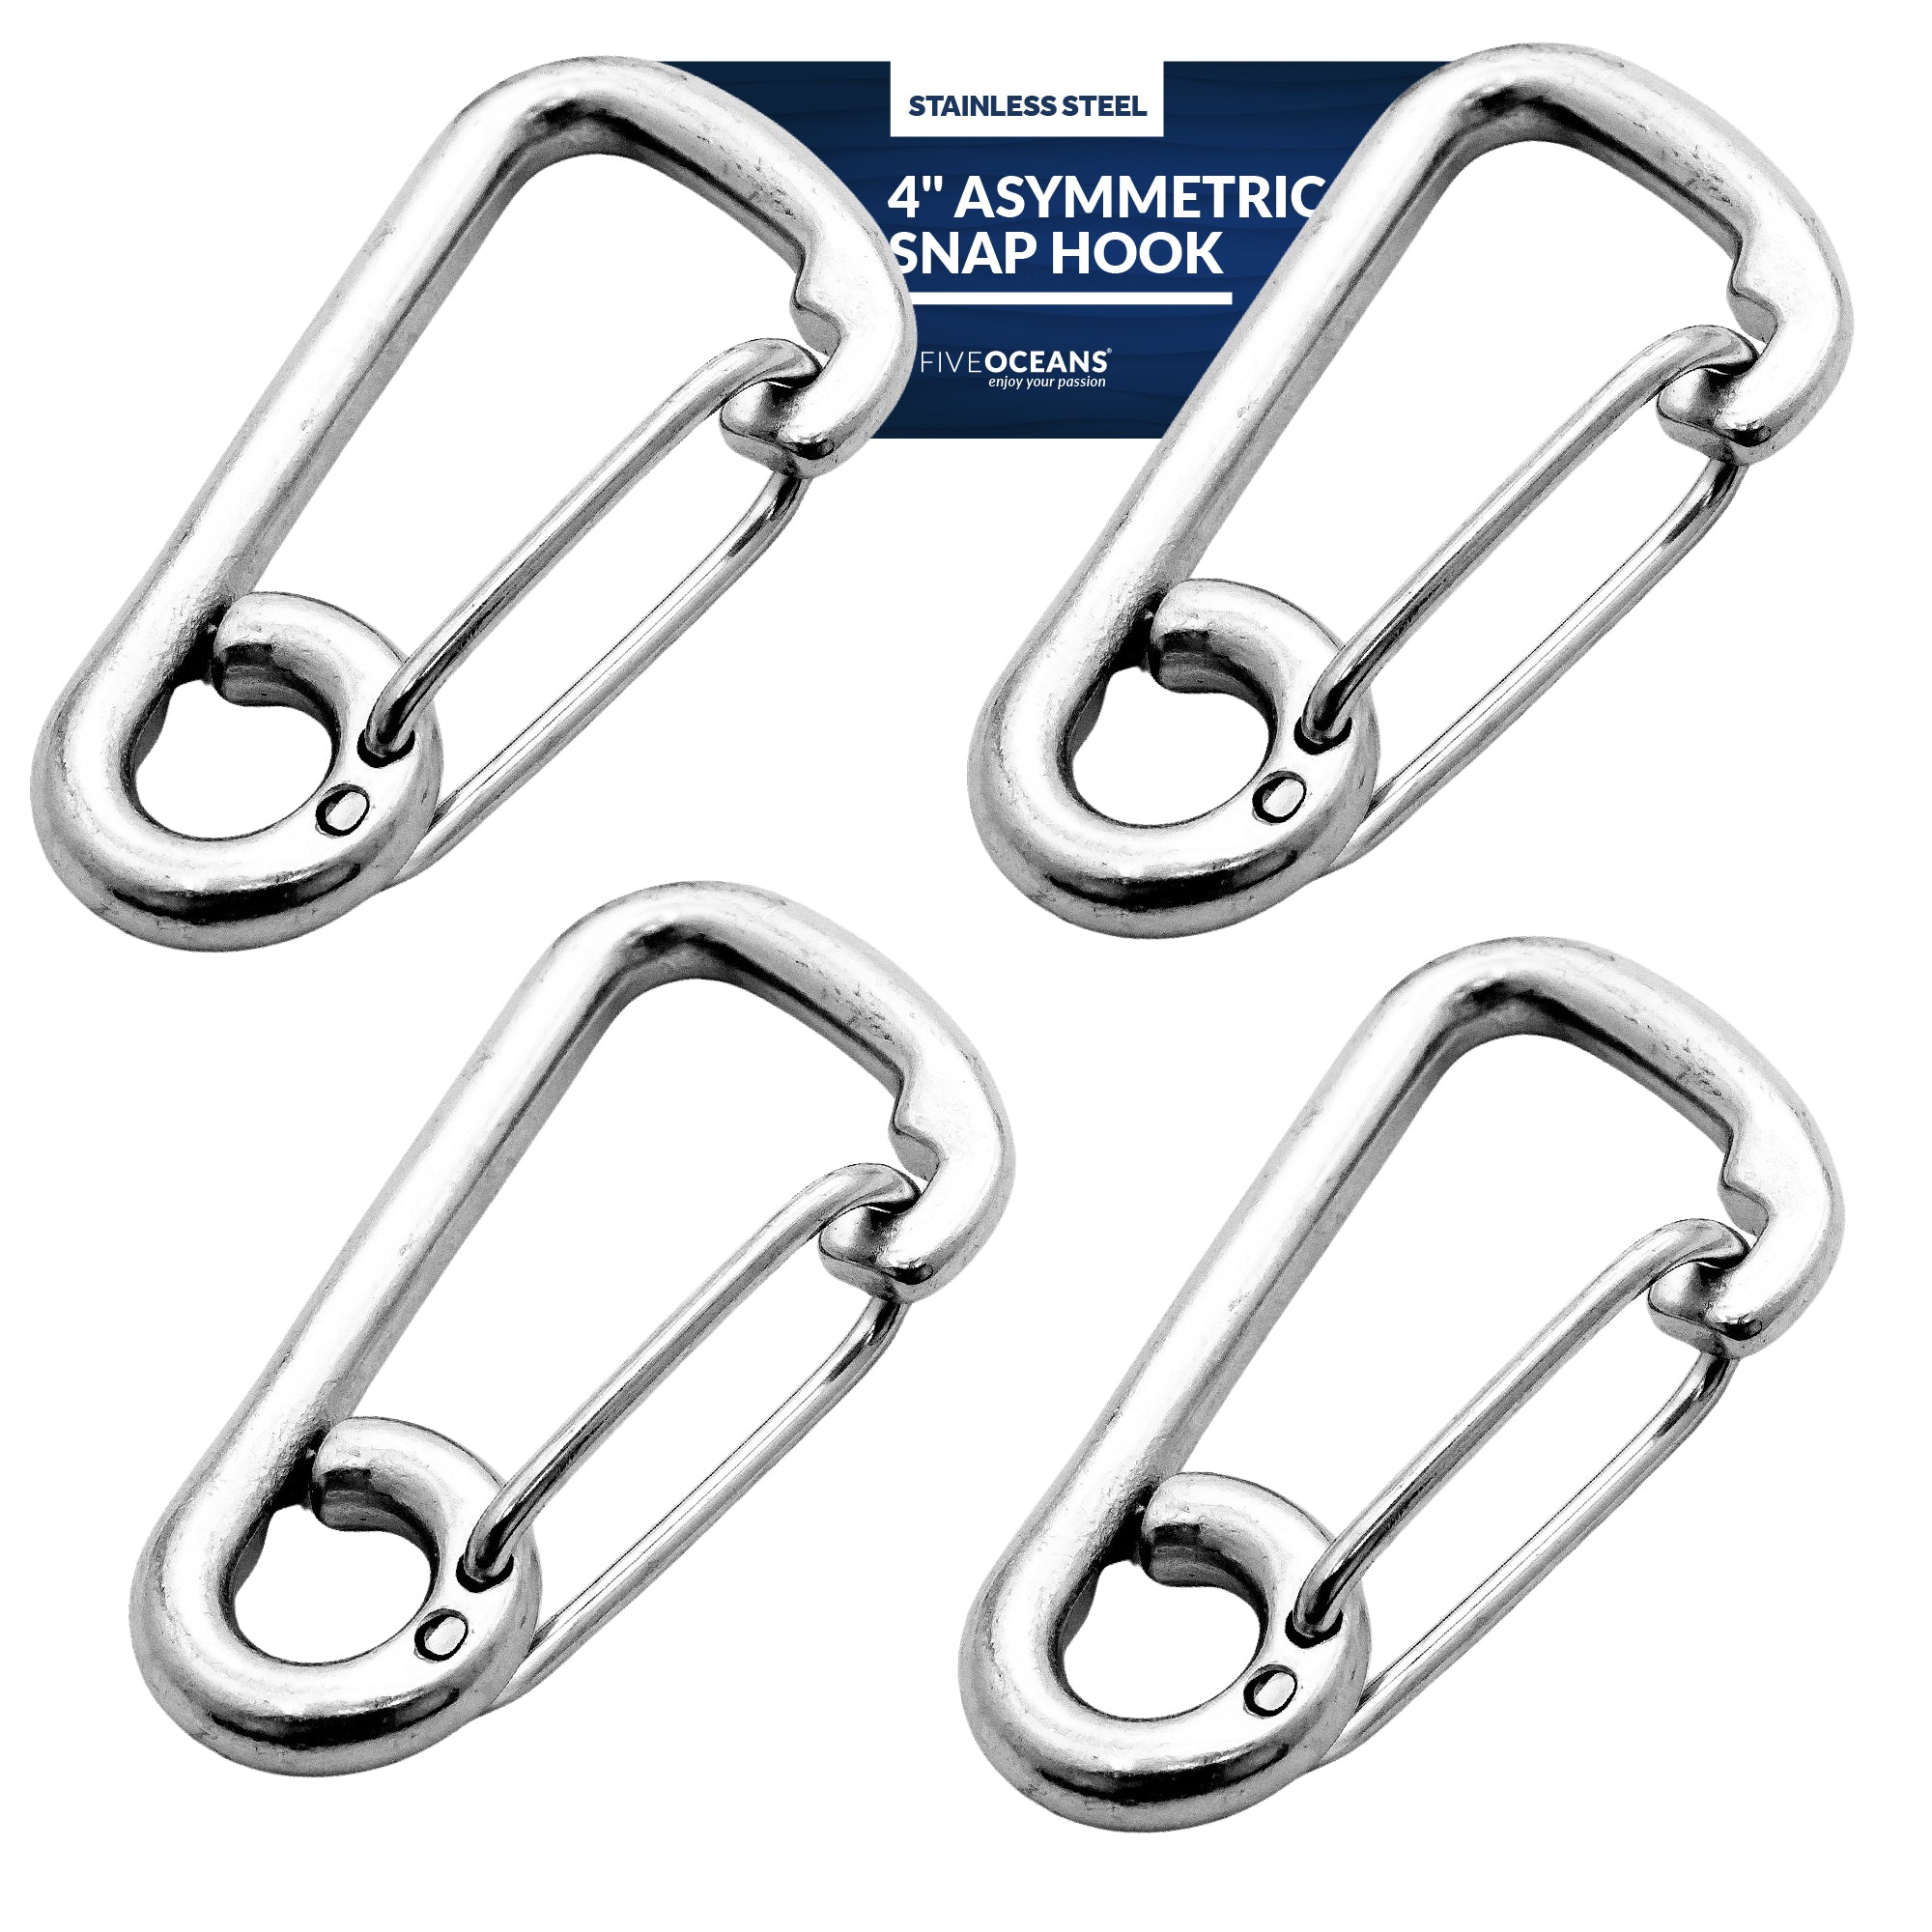 Asymmetric Snap Hook, Stainless Steel, 4" 4-Pack - FO466-M4